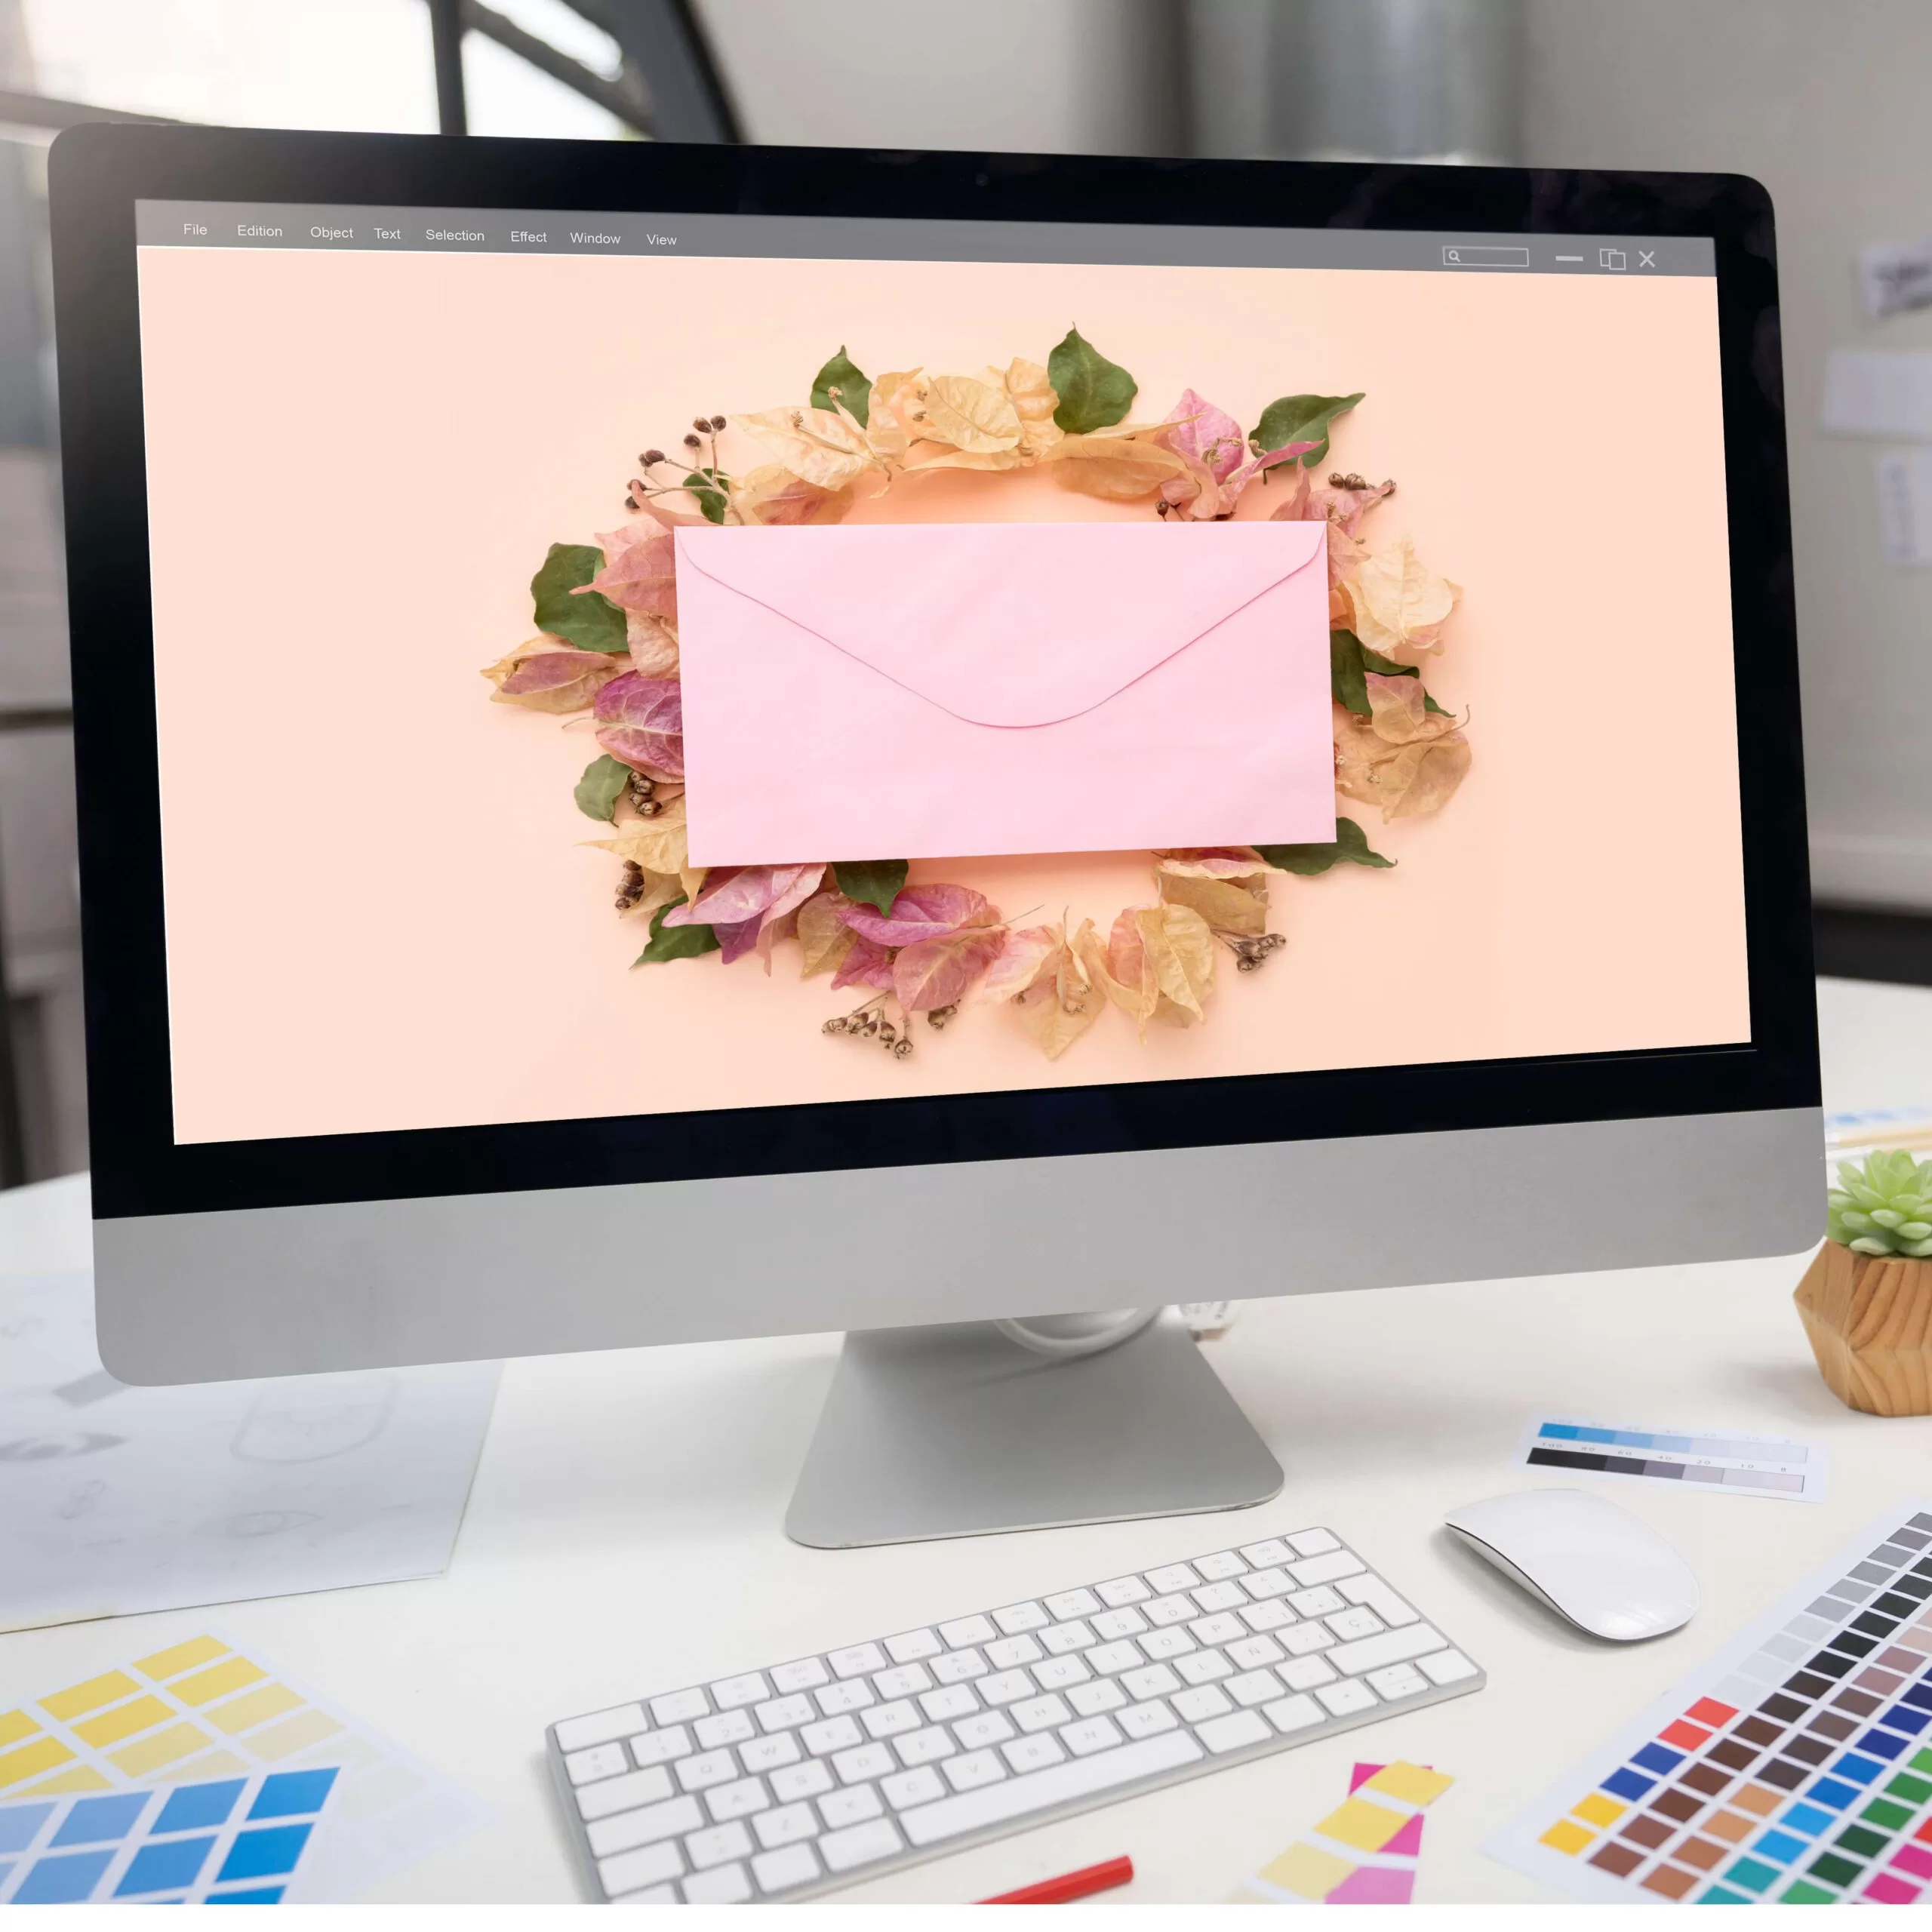 design envelopes